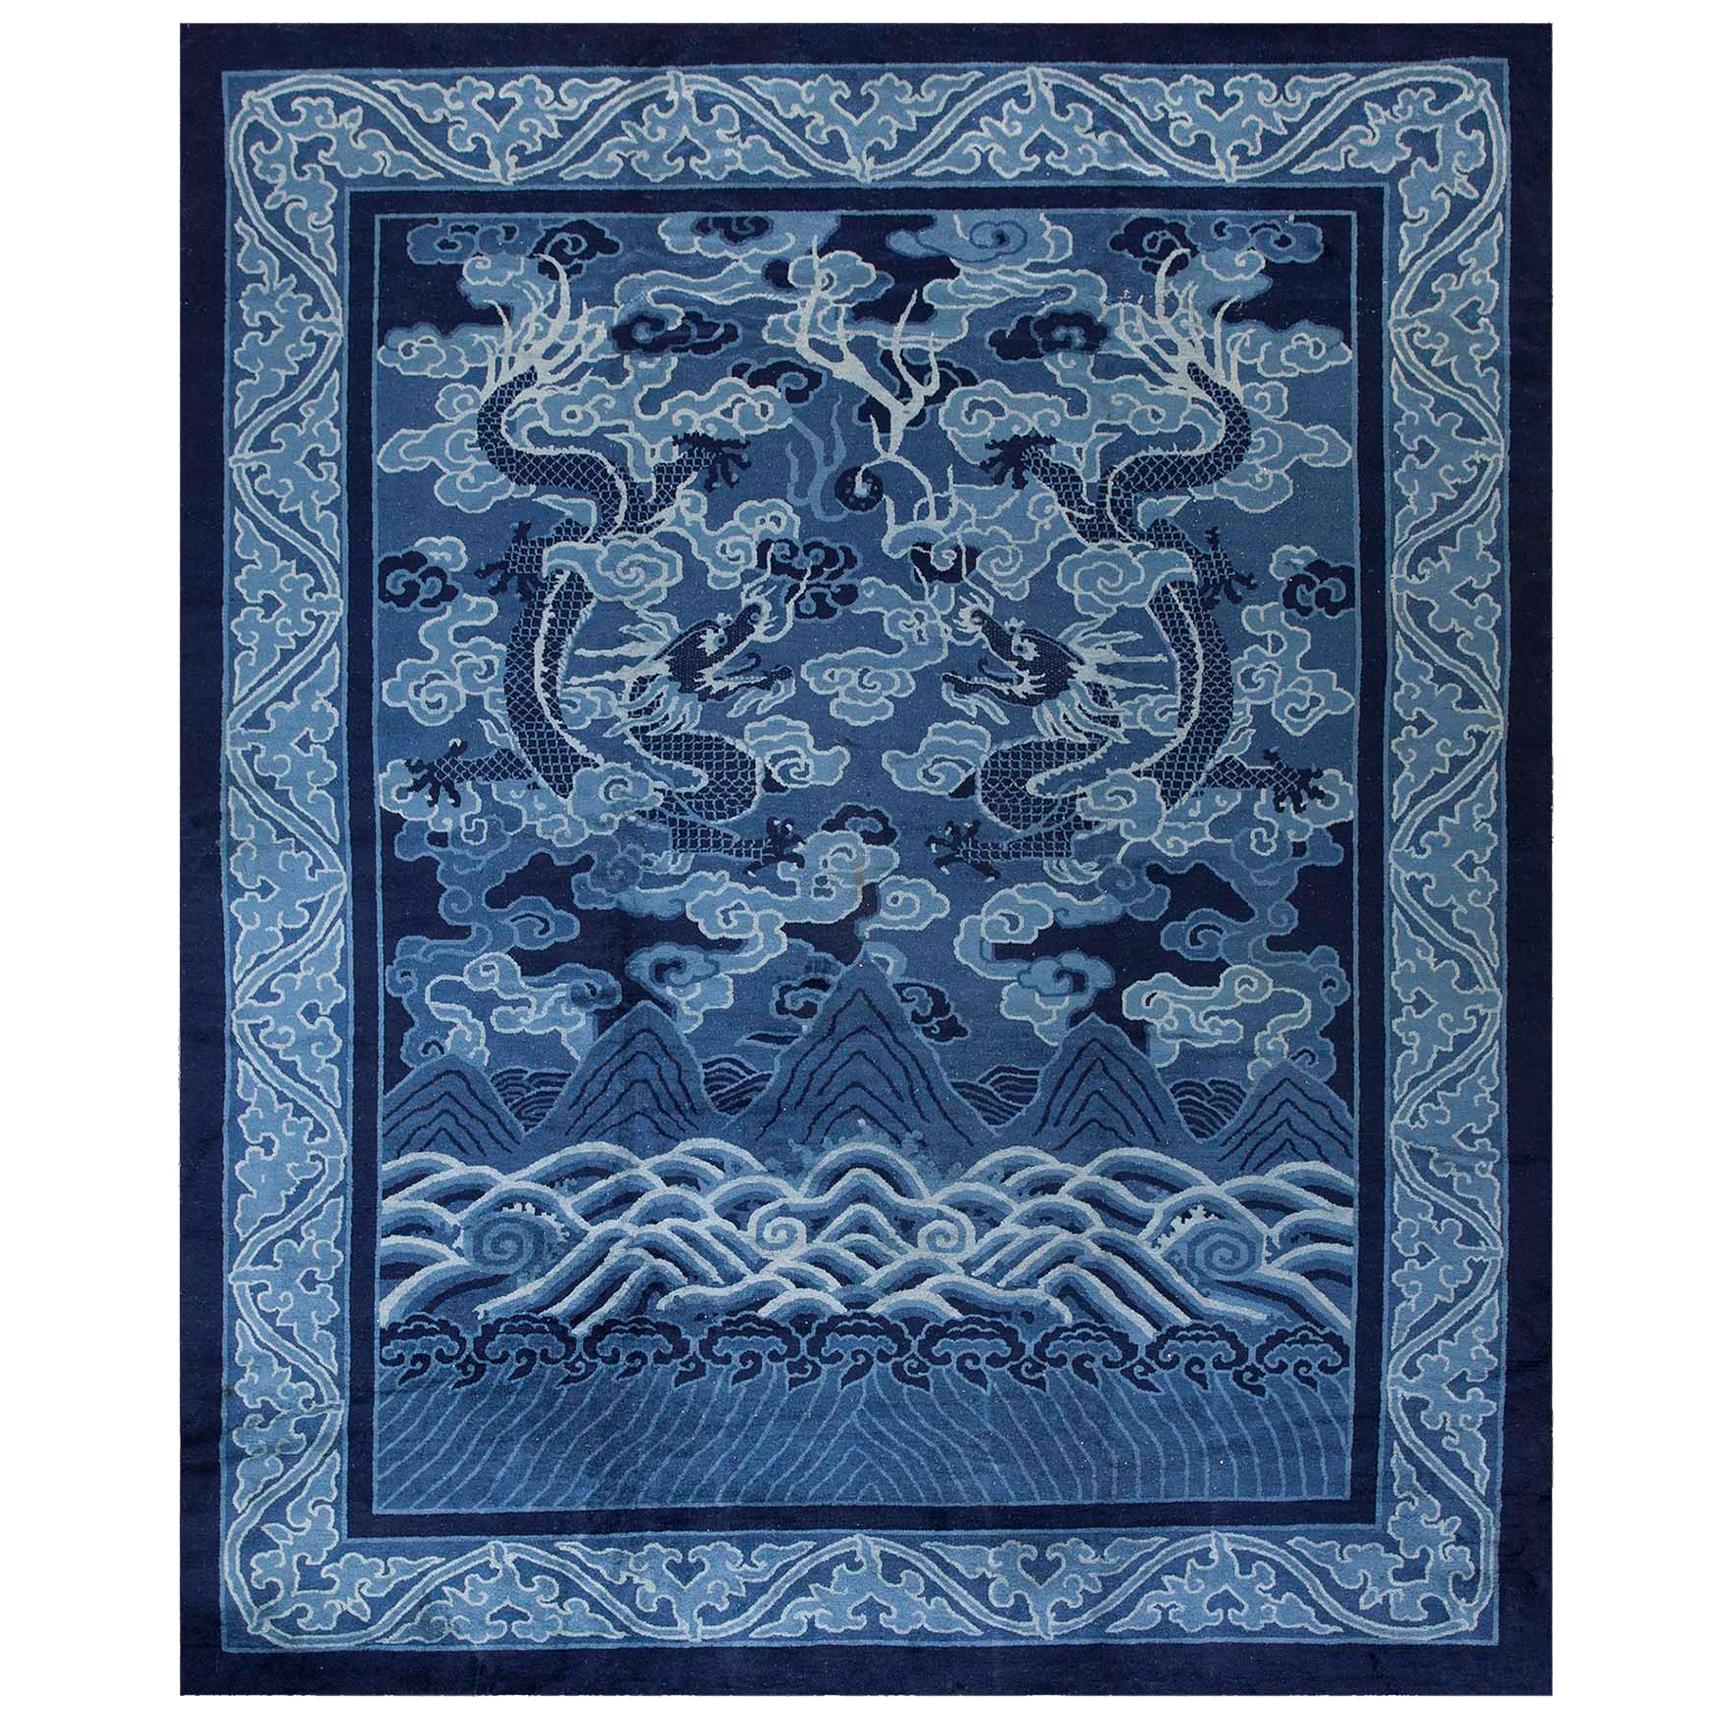 Early 20th Century Chinese Peking Carpet ( 9'4" x 11'8" - 285 x 355 )